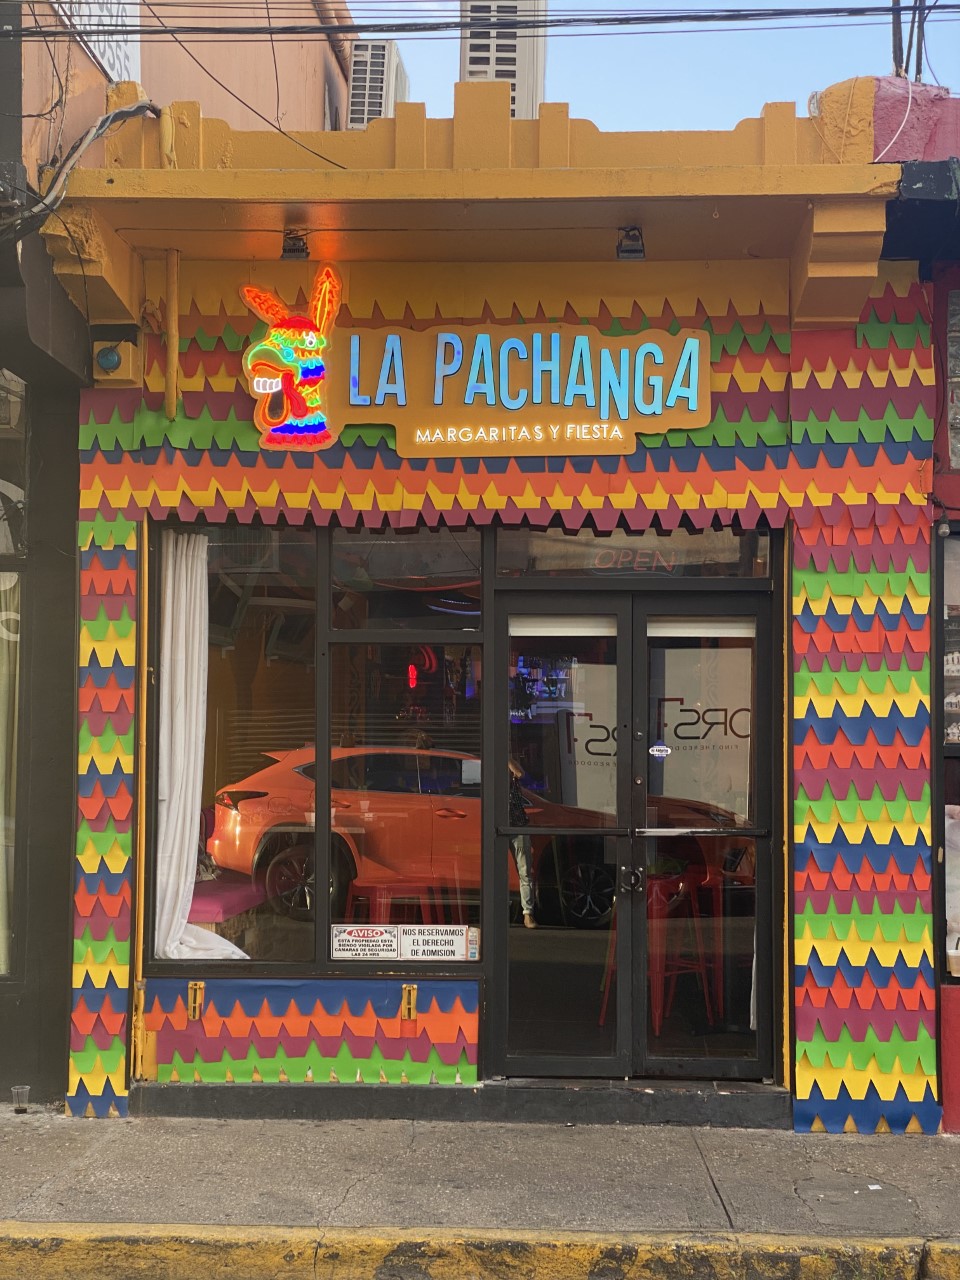 La Pachanga “Margaritas & Fiesta”